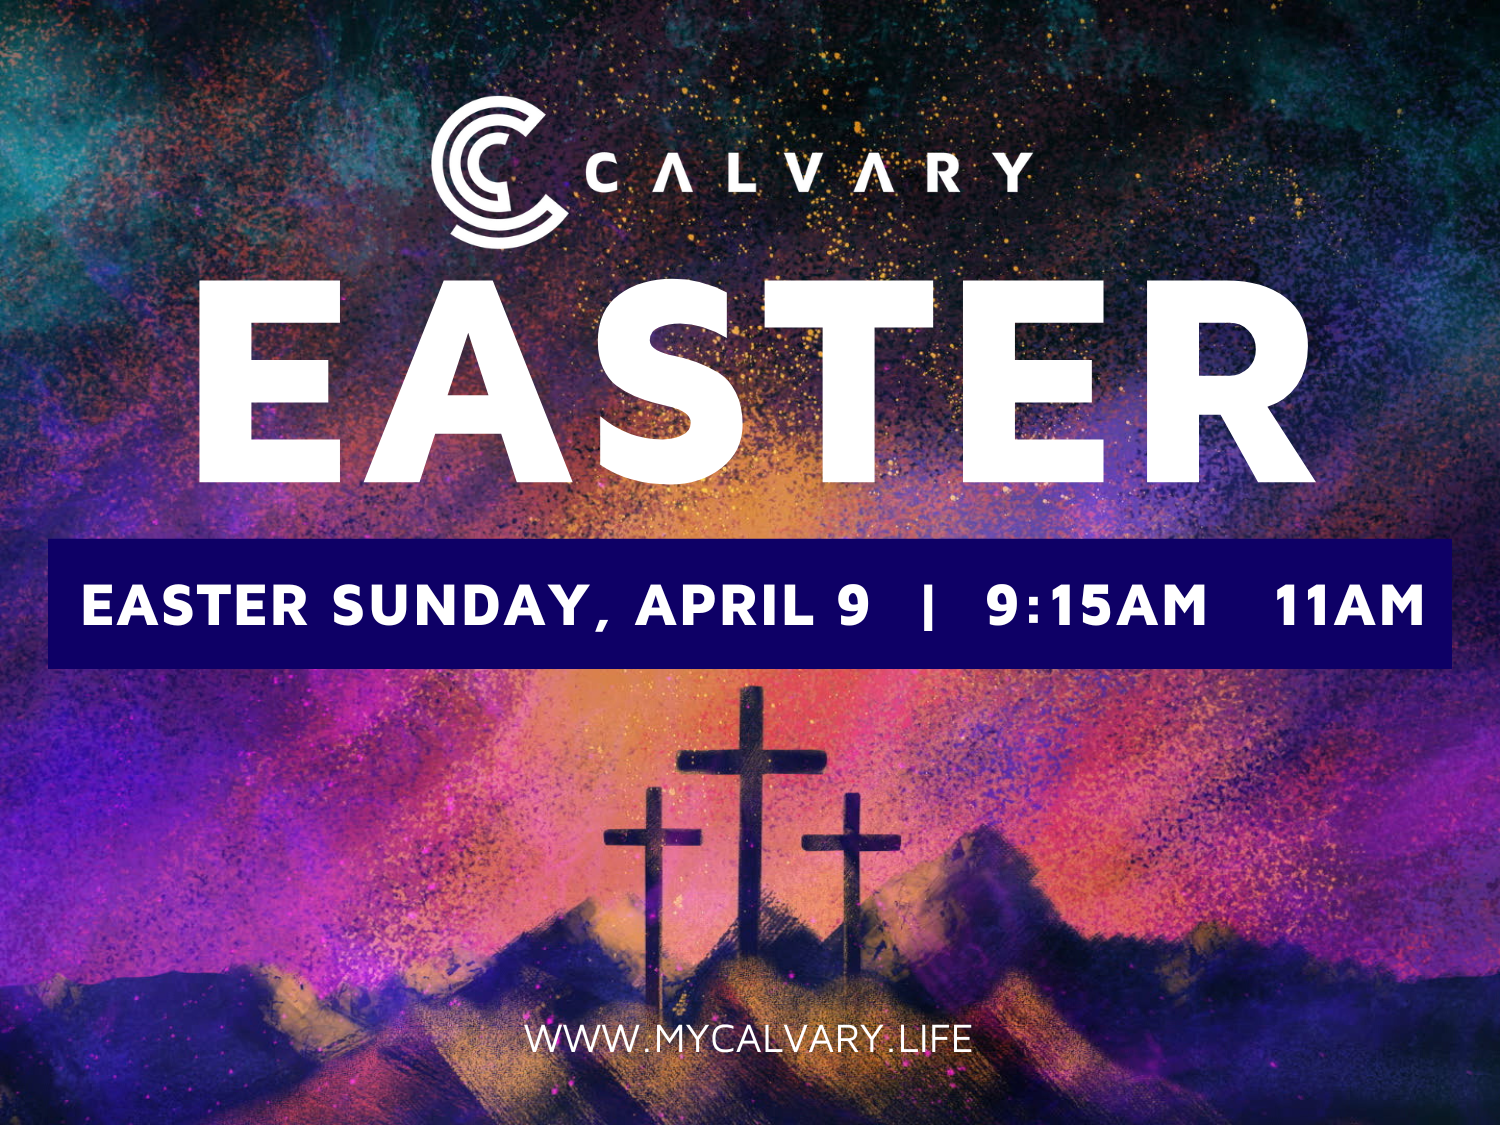 Easter Sunday Service web calendar graphic.